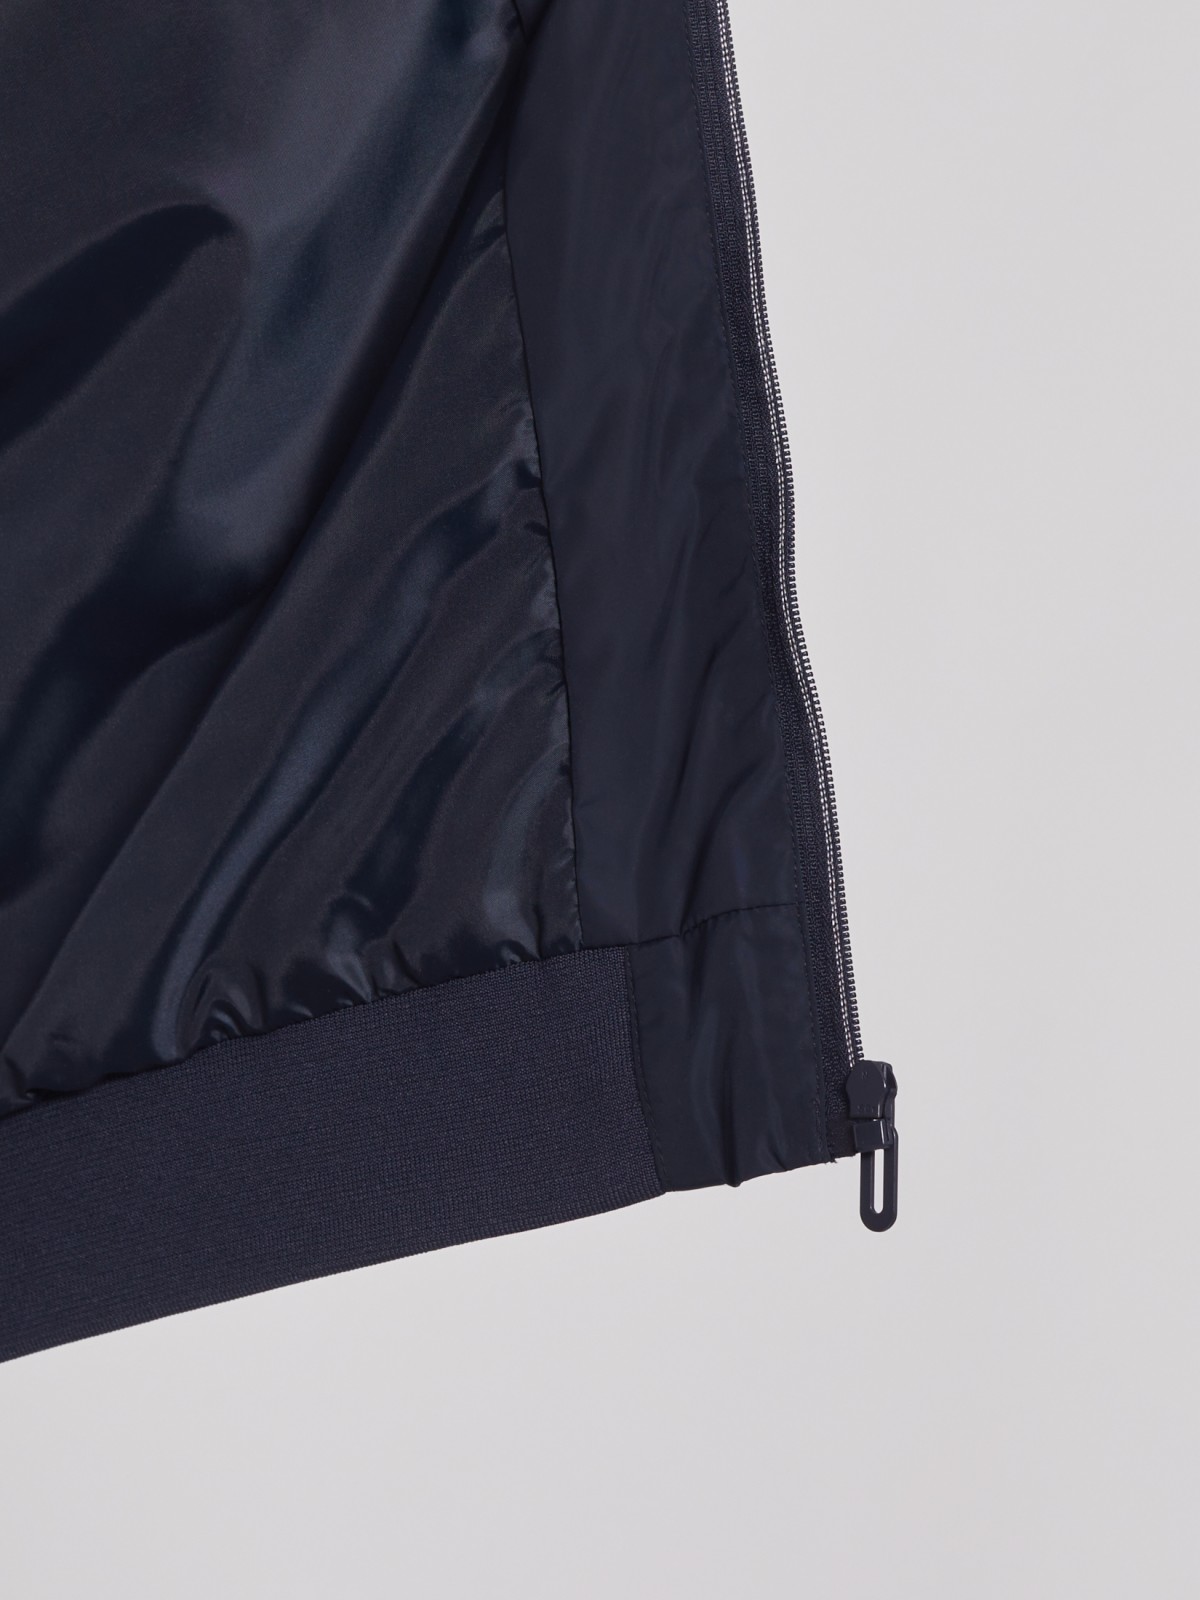 Куртка с воротником-стойкой zolla 012215602034, цвет темно-синий, размер L - фото 3